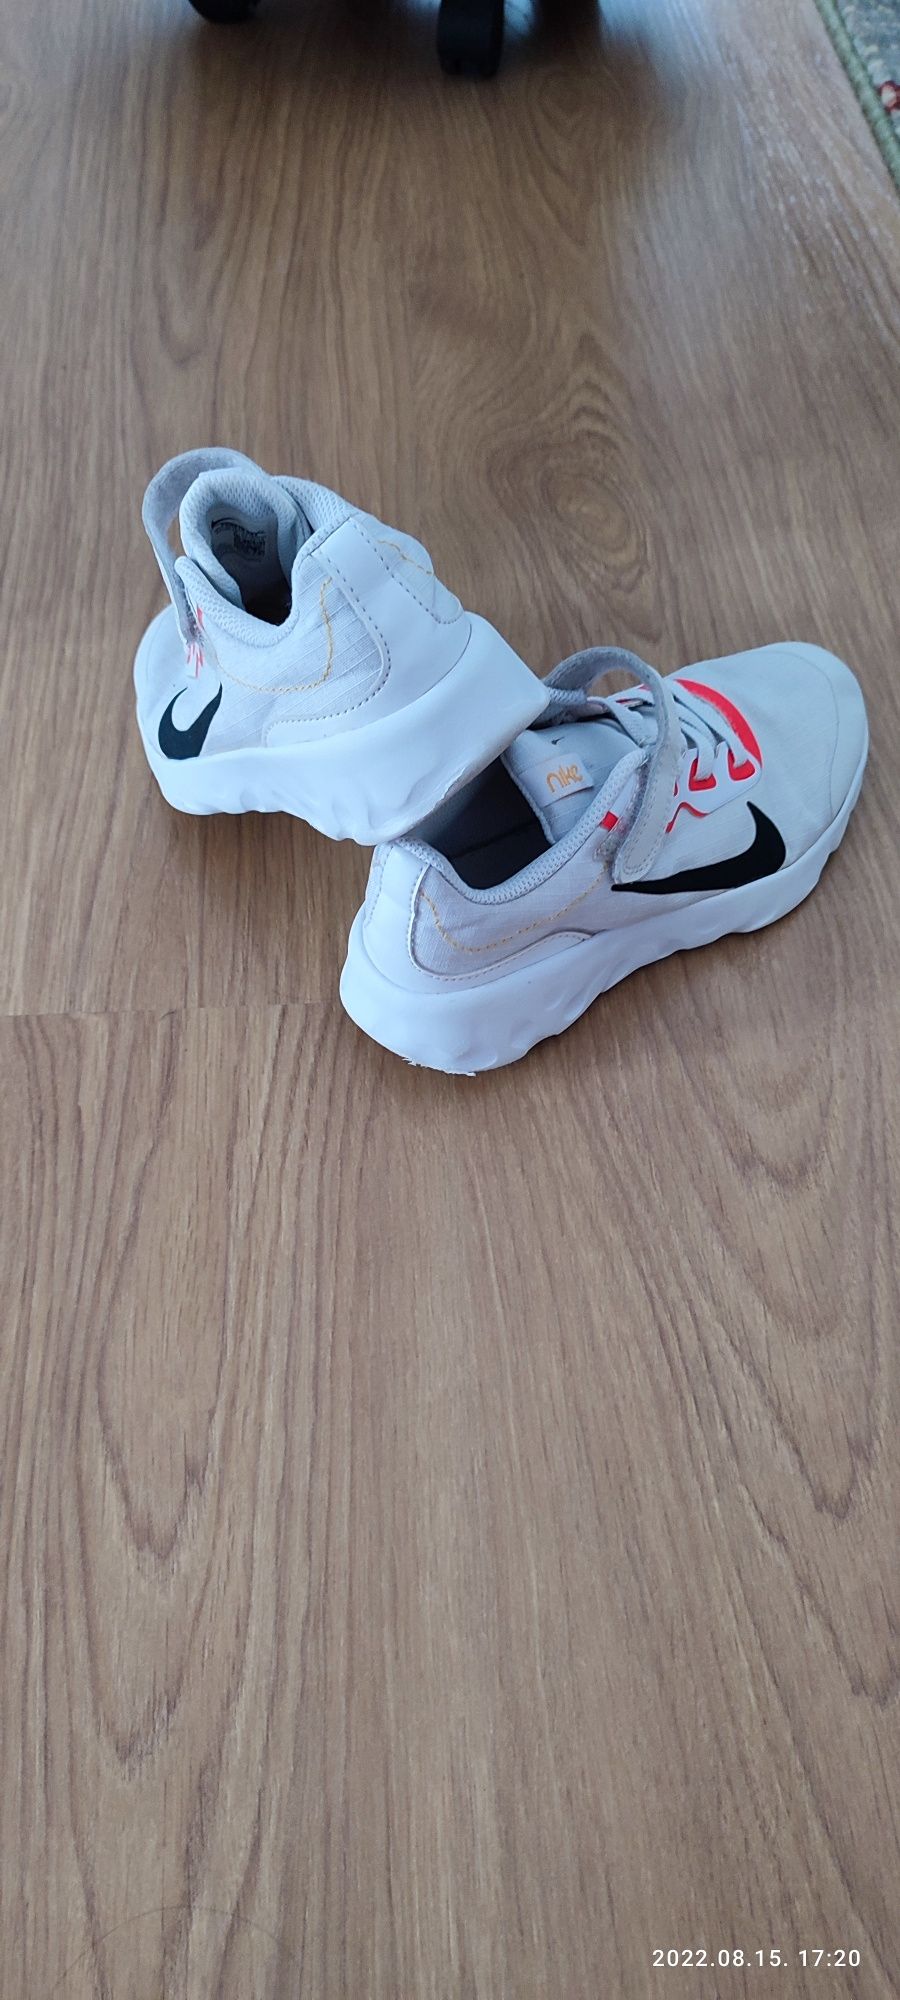 Pantofi Nike copii